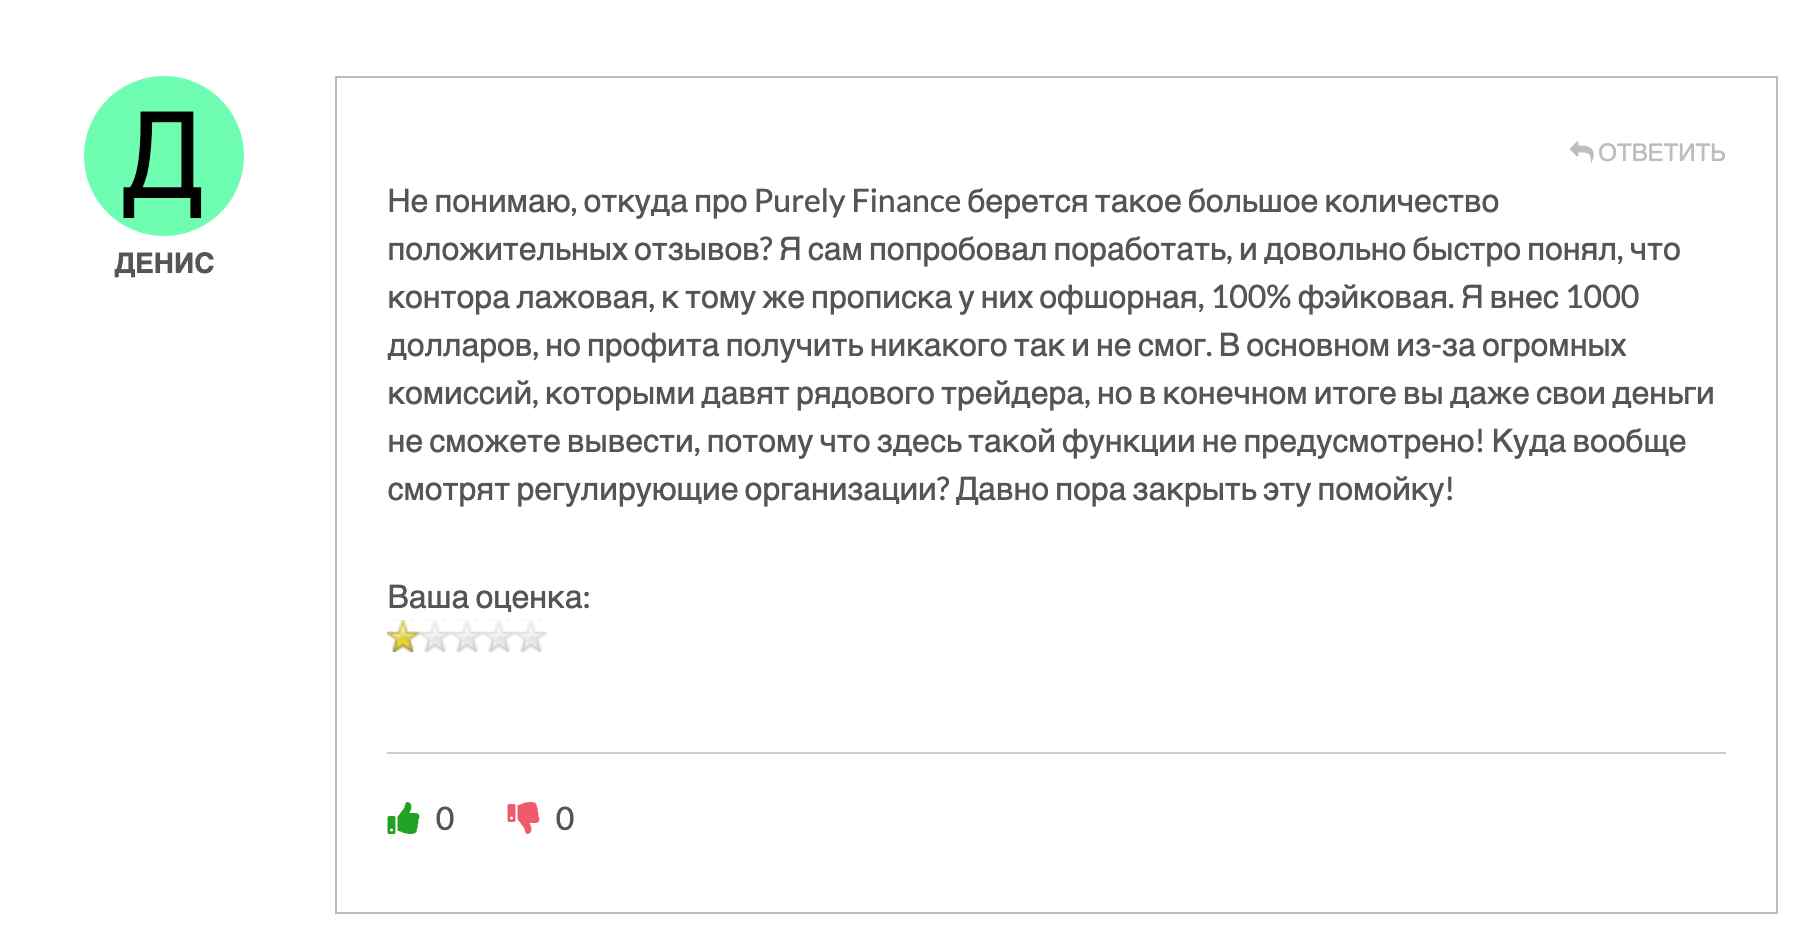 Purely Finance — брокер, за которым стоят очередные аферисты